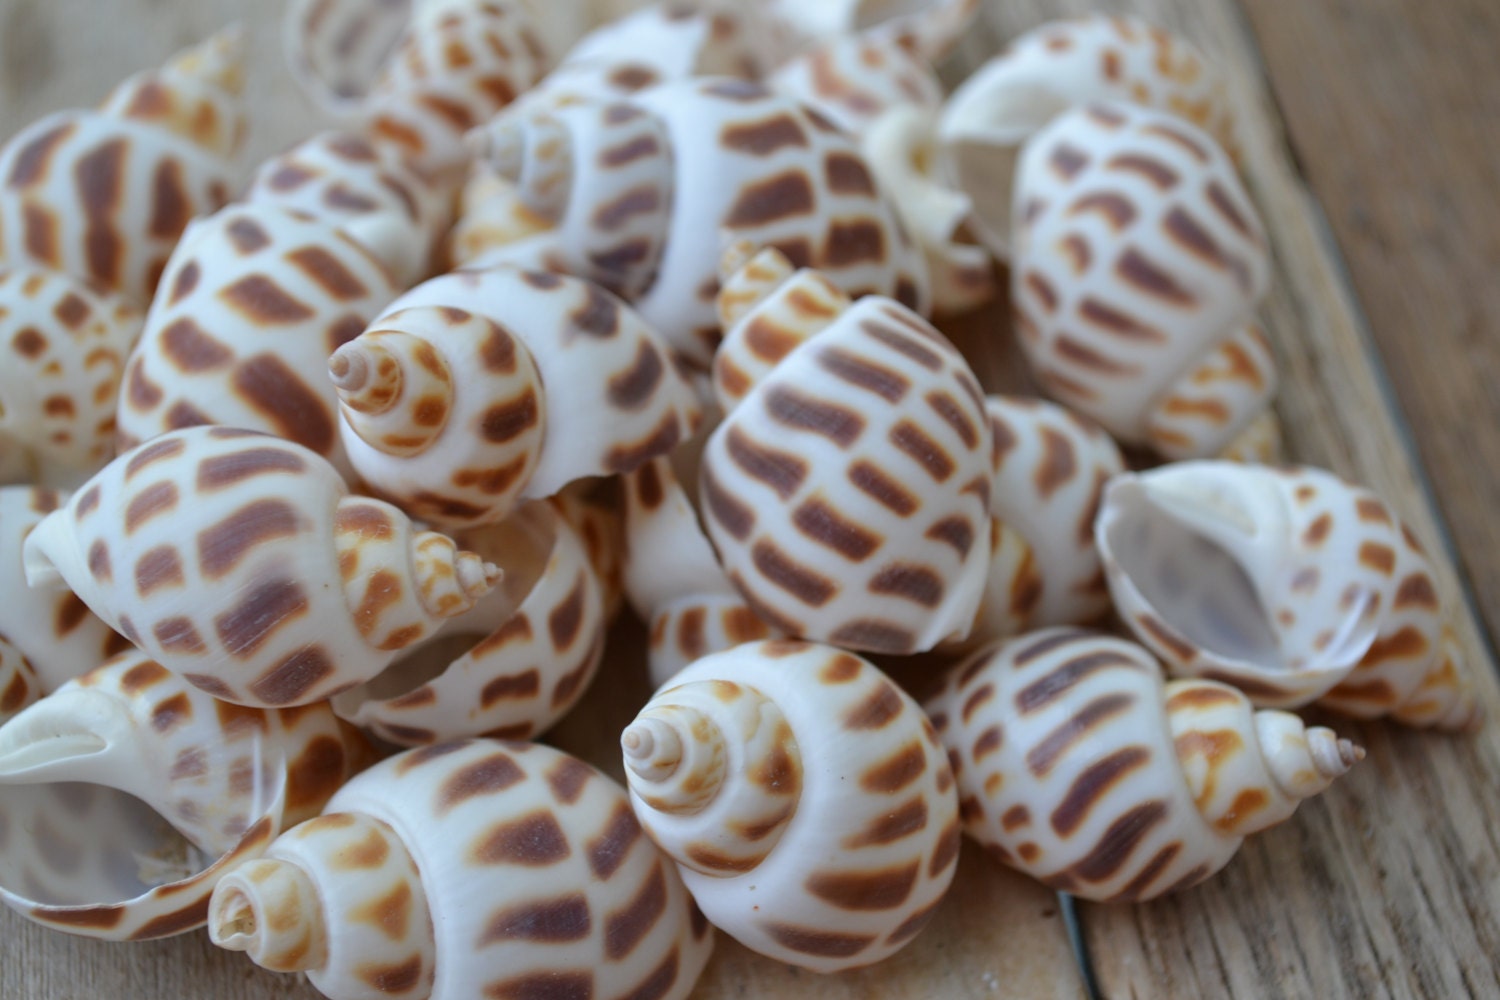 Natural Sea Shells x 10 - Deborah Beads